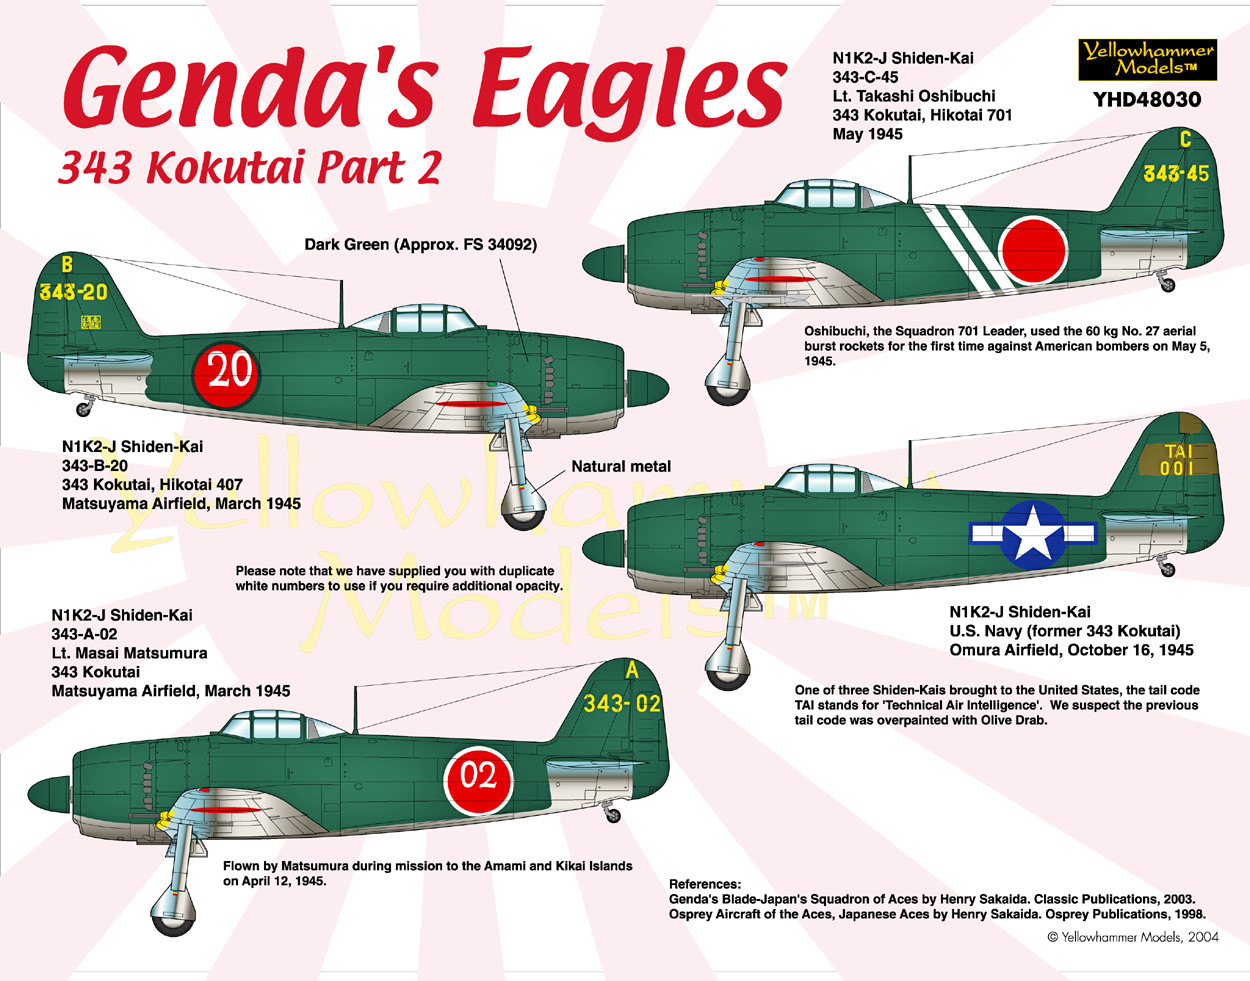 YHD48030 Genda's Eagles, 343 Kokutai Part 2.